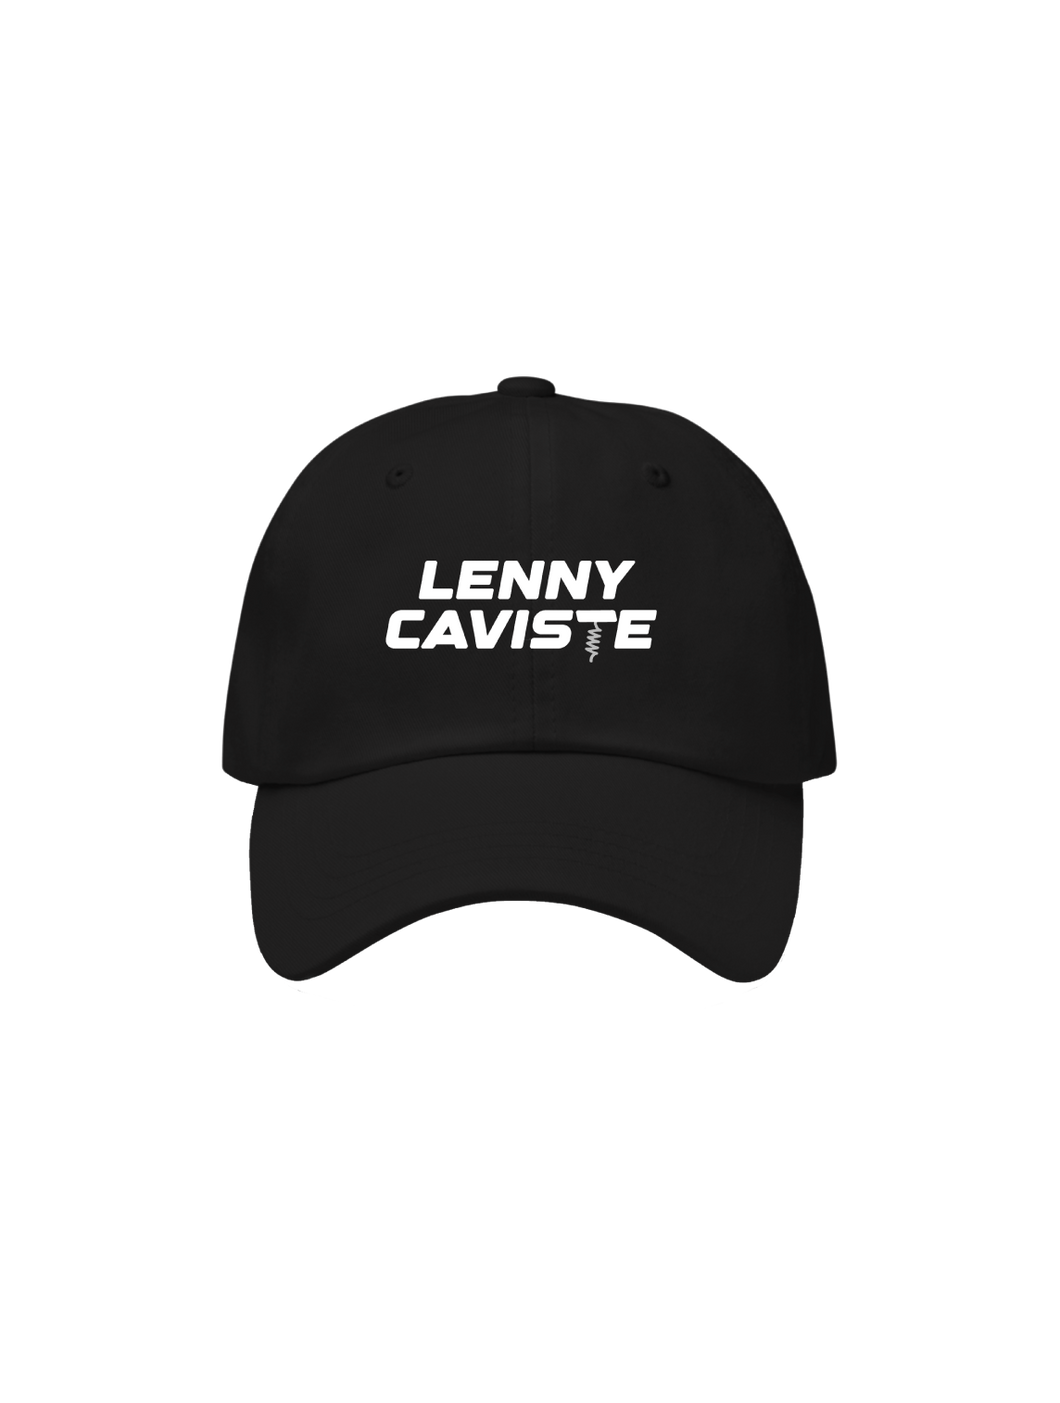 Lenny Caviste